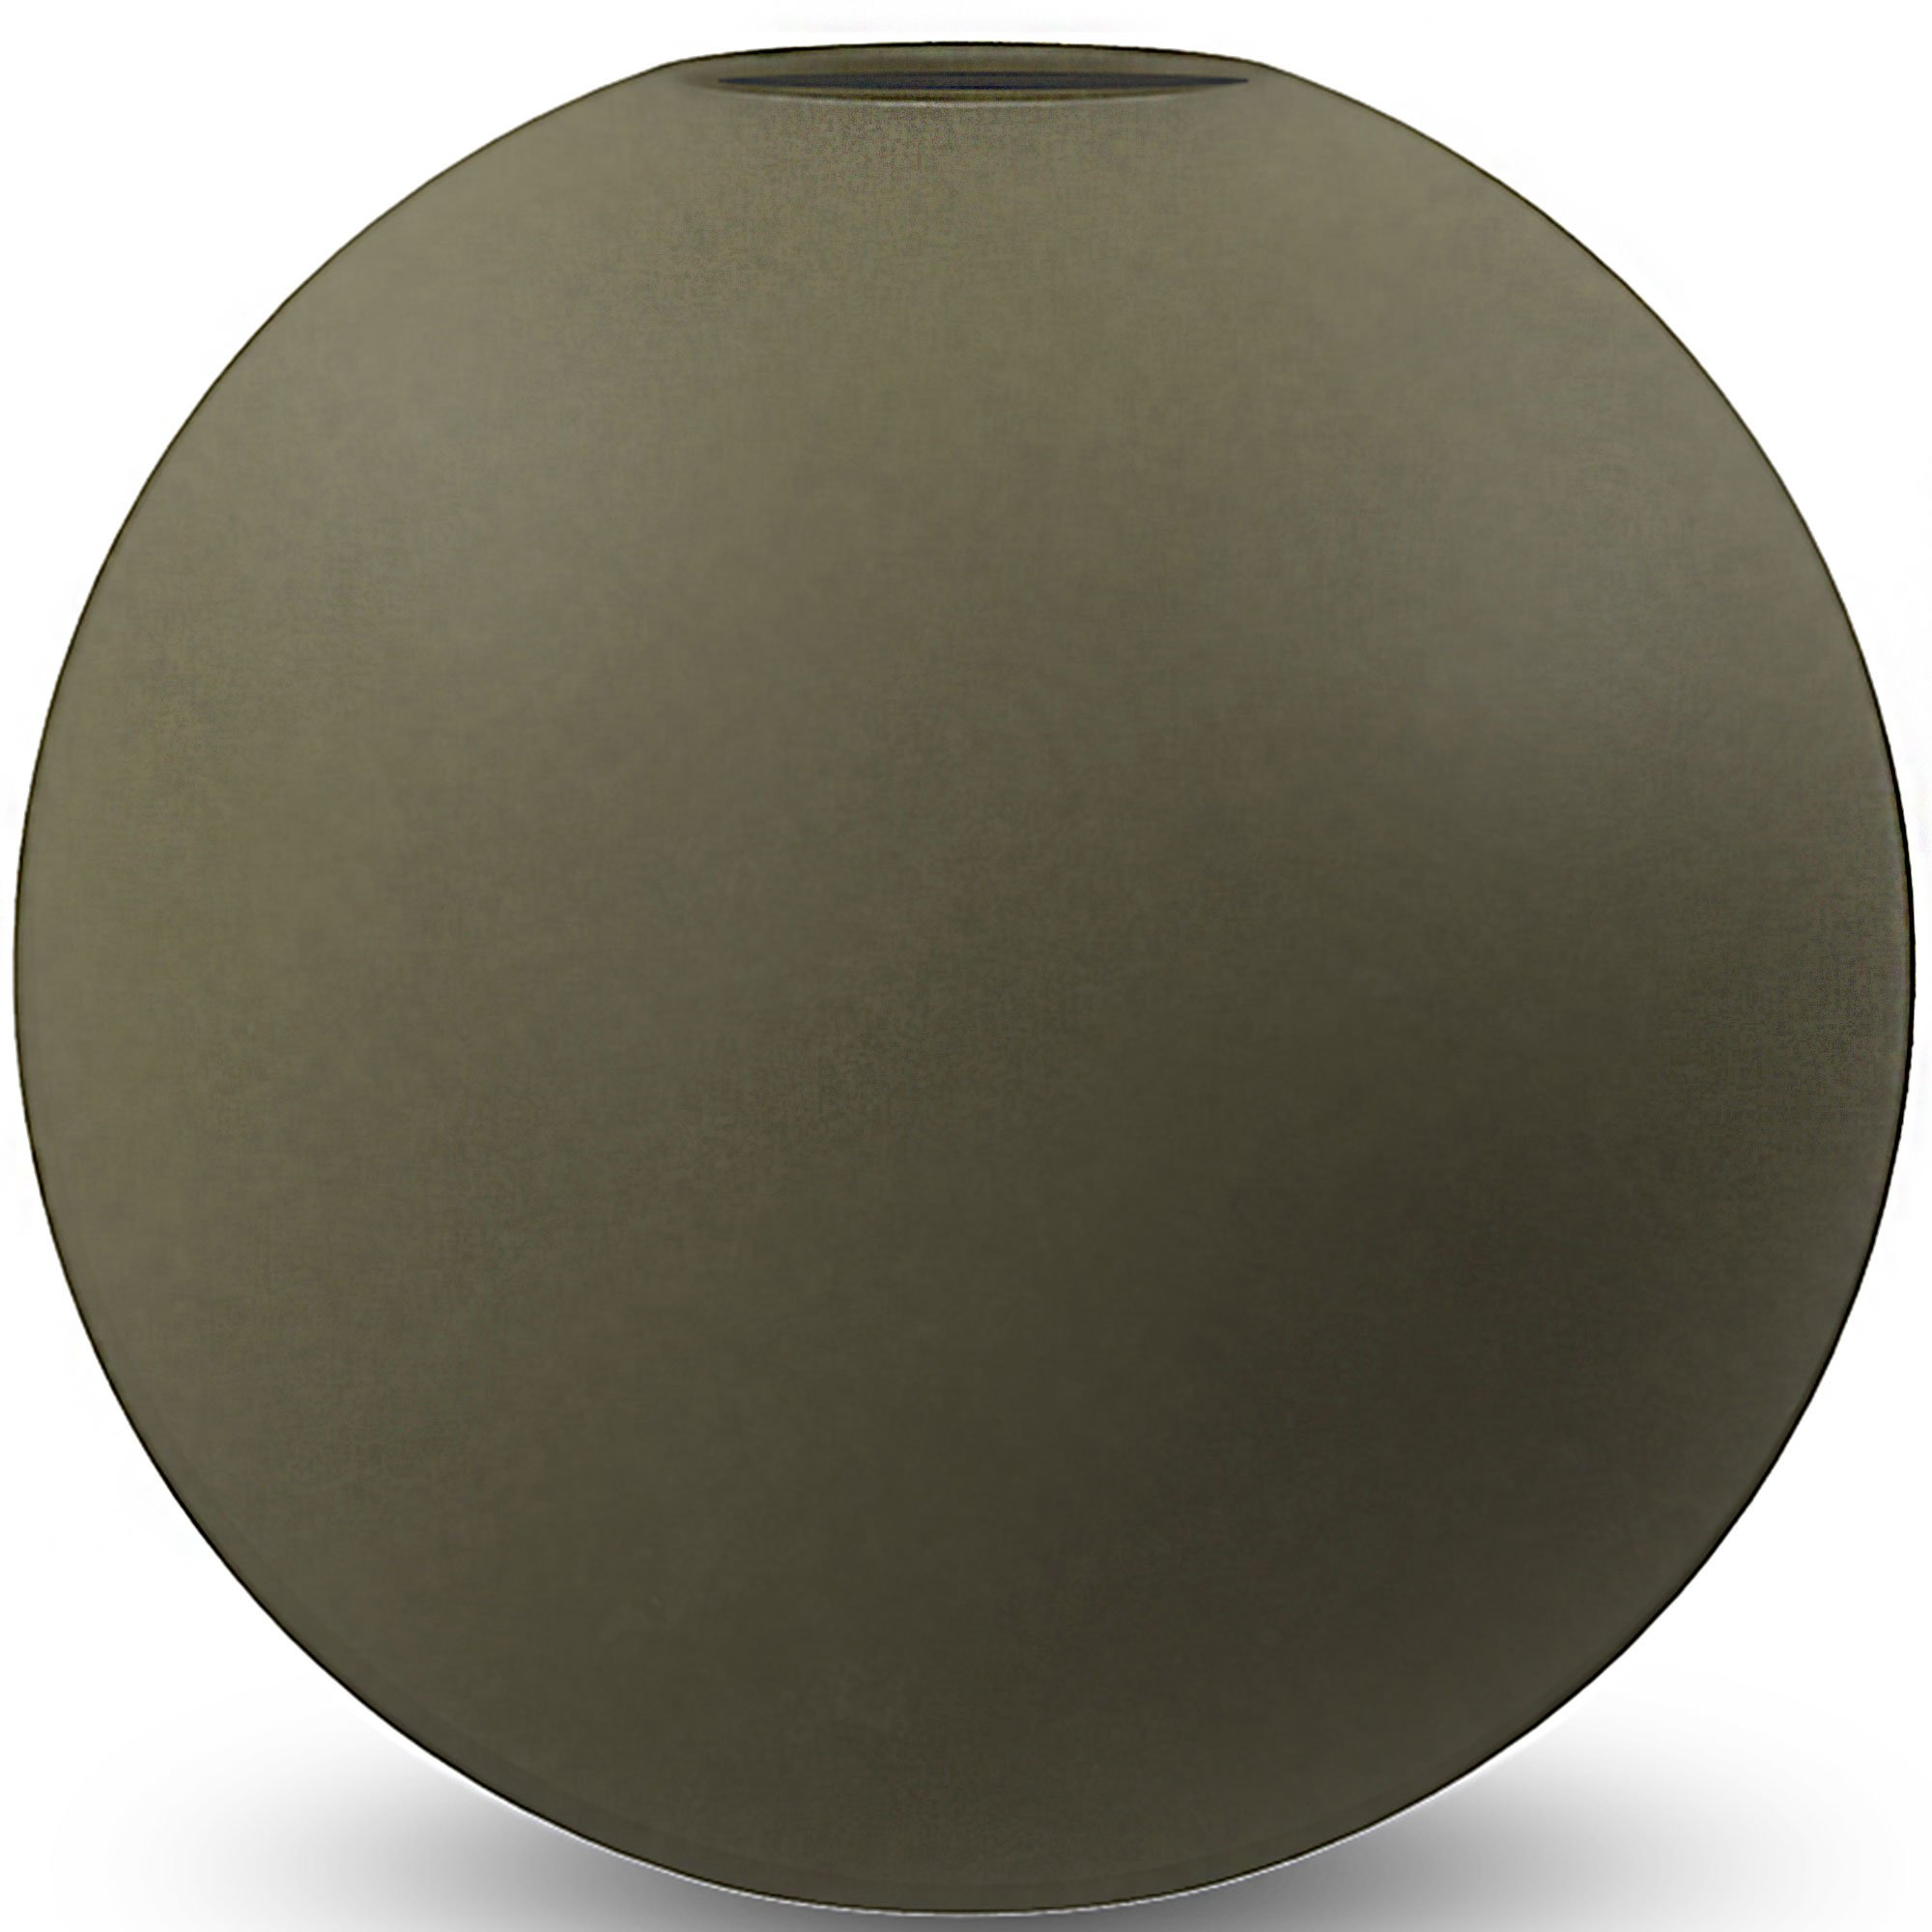 Cooee Design Ball vas 20 cm olive